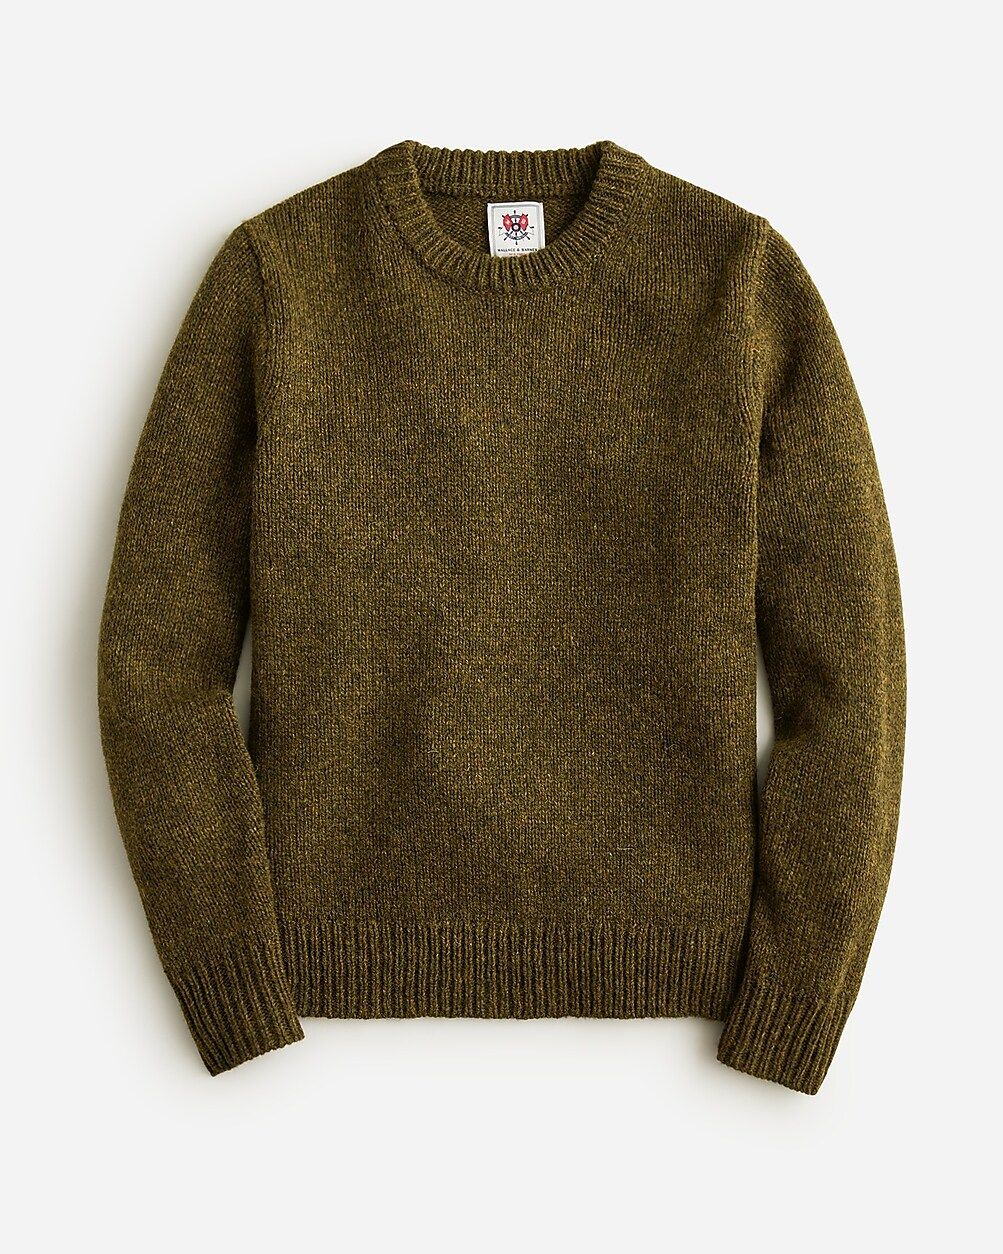 Wallace & Barnes wool heather crewneck sweater | J.Crew US